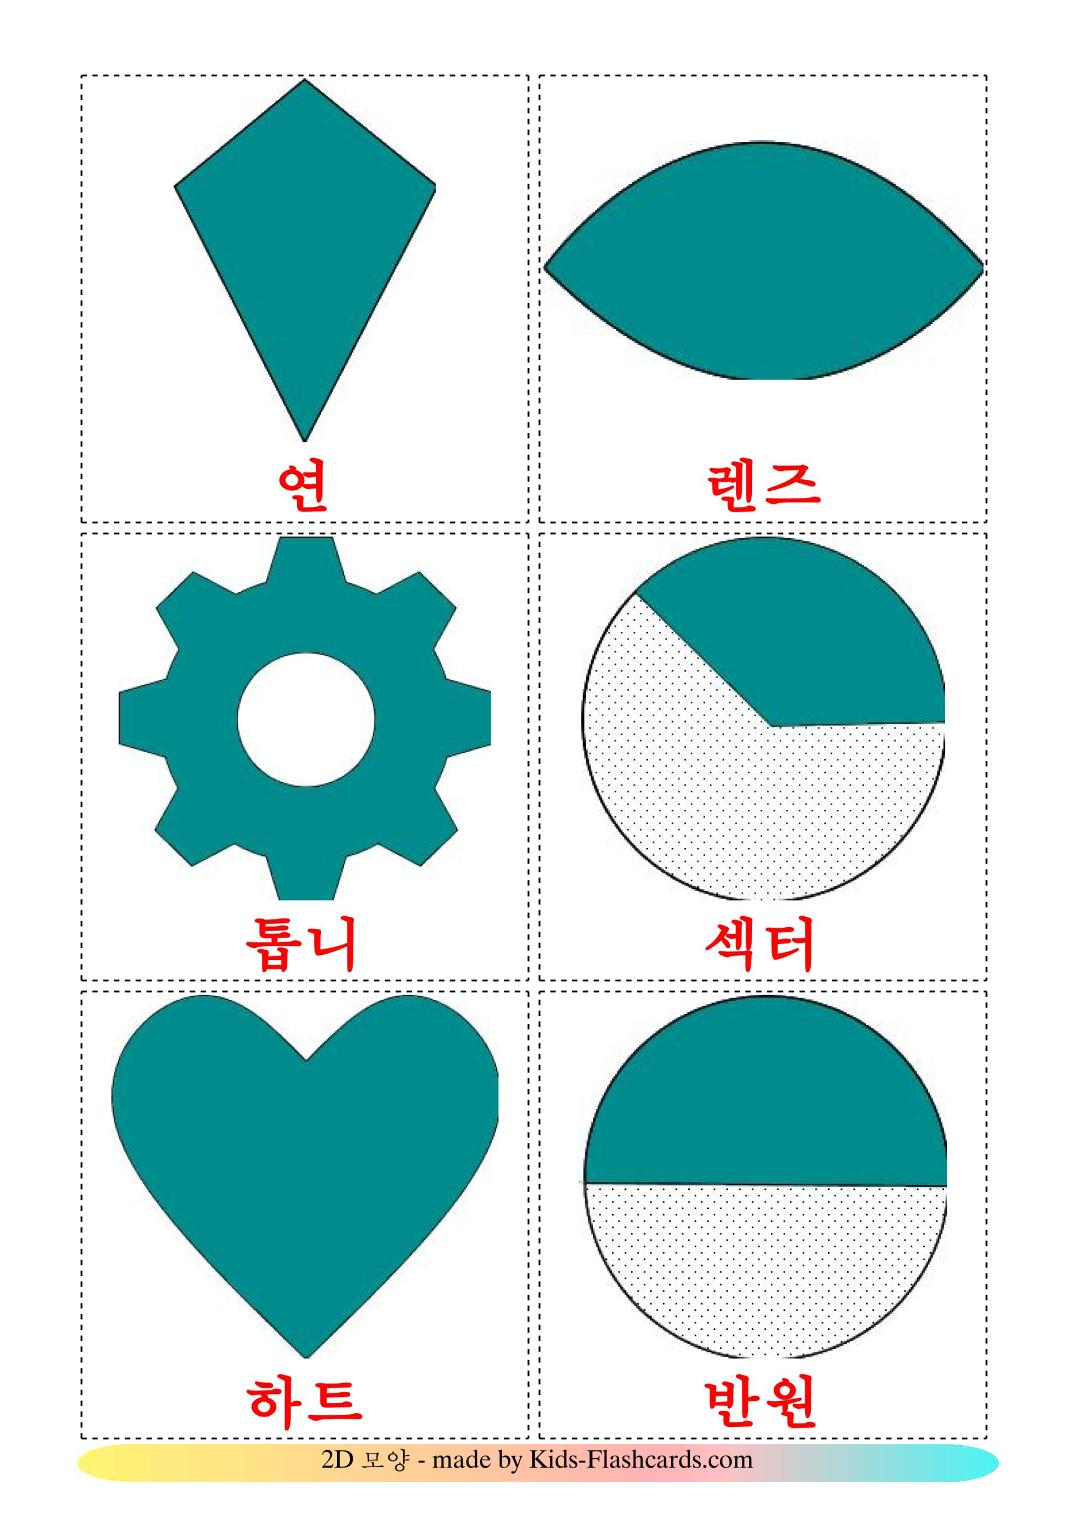 Figuras  2D - 35 fichas de coreano para imprimir gratis 